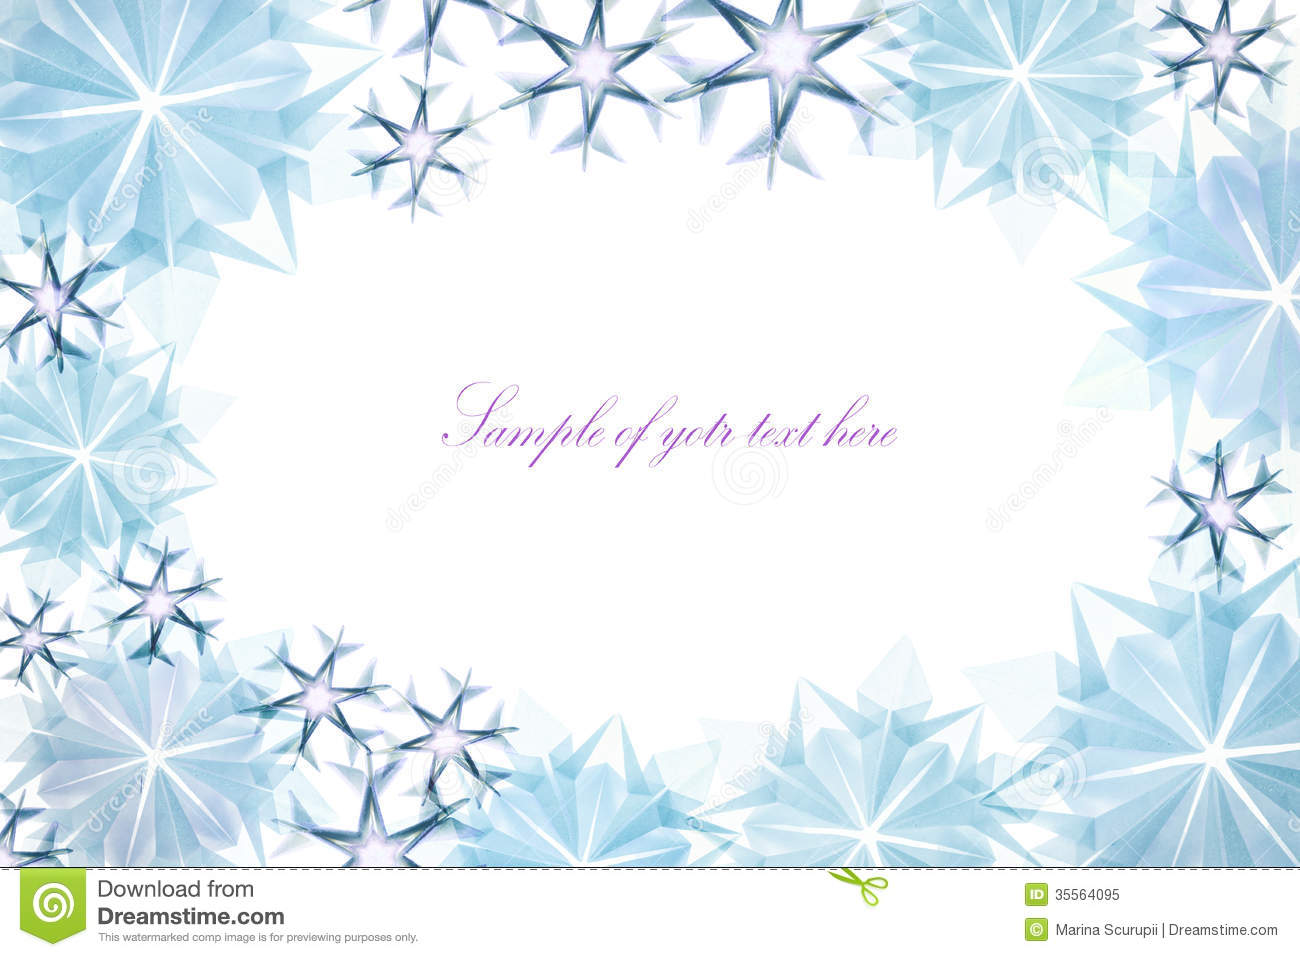 Transparent Snowflake Frame Royalty Free Stock Photo   Image  35564095